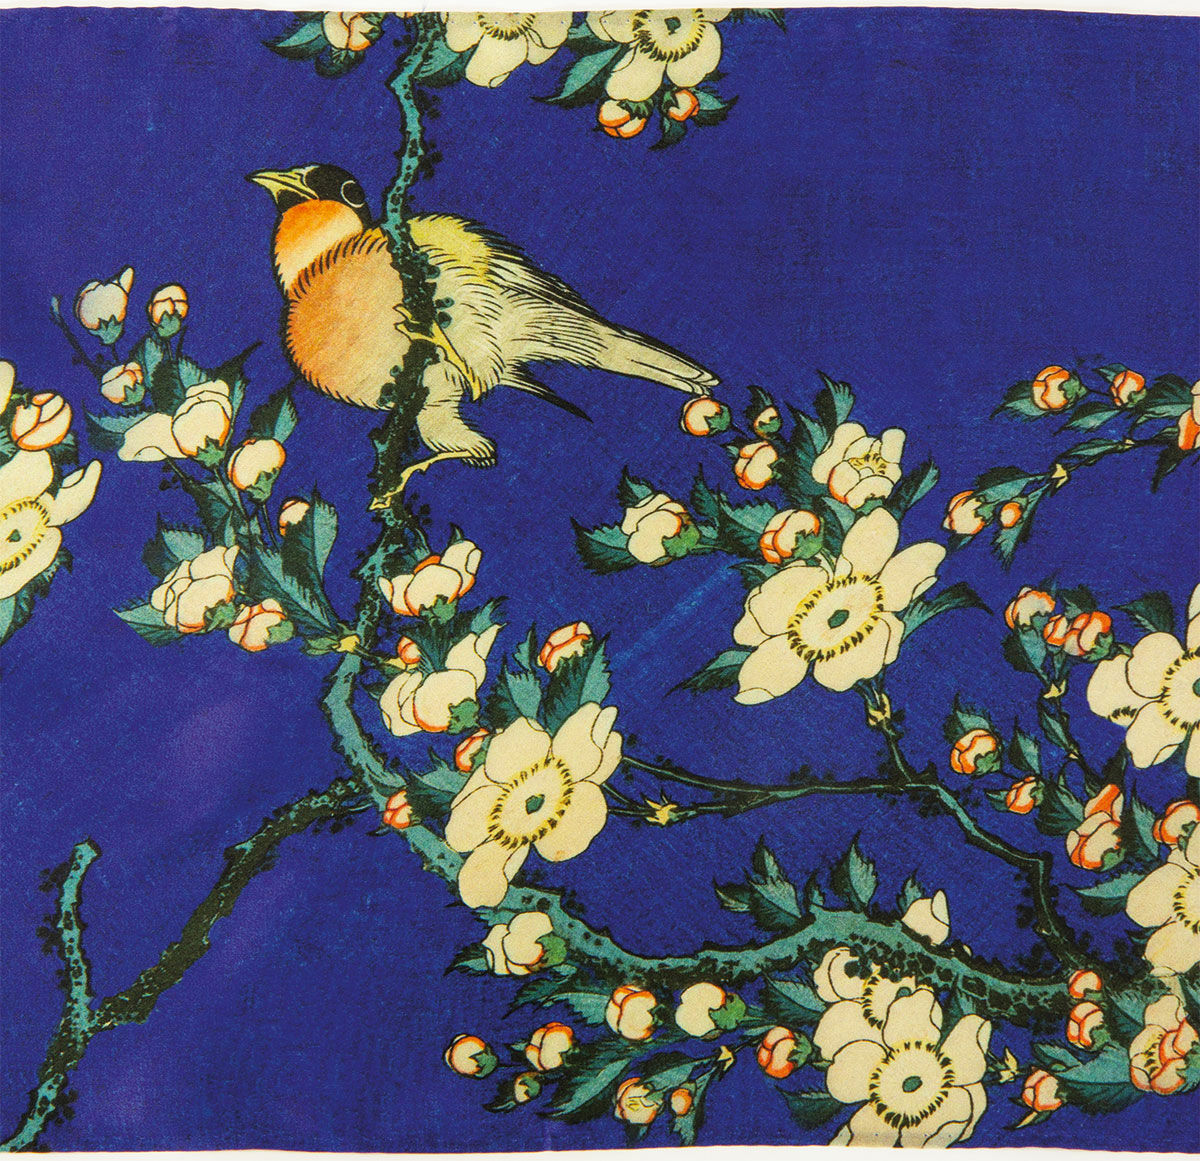 Silk scarf "Cherry Blossoms" by Katsushika Hokusai